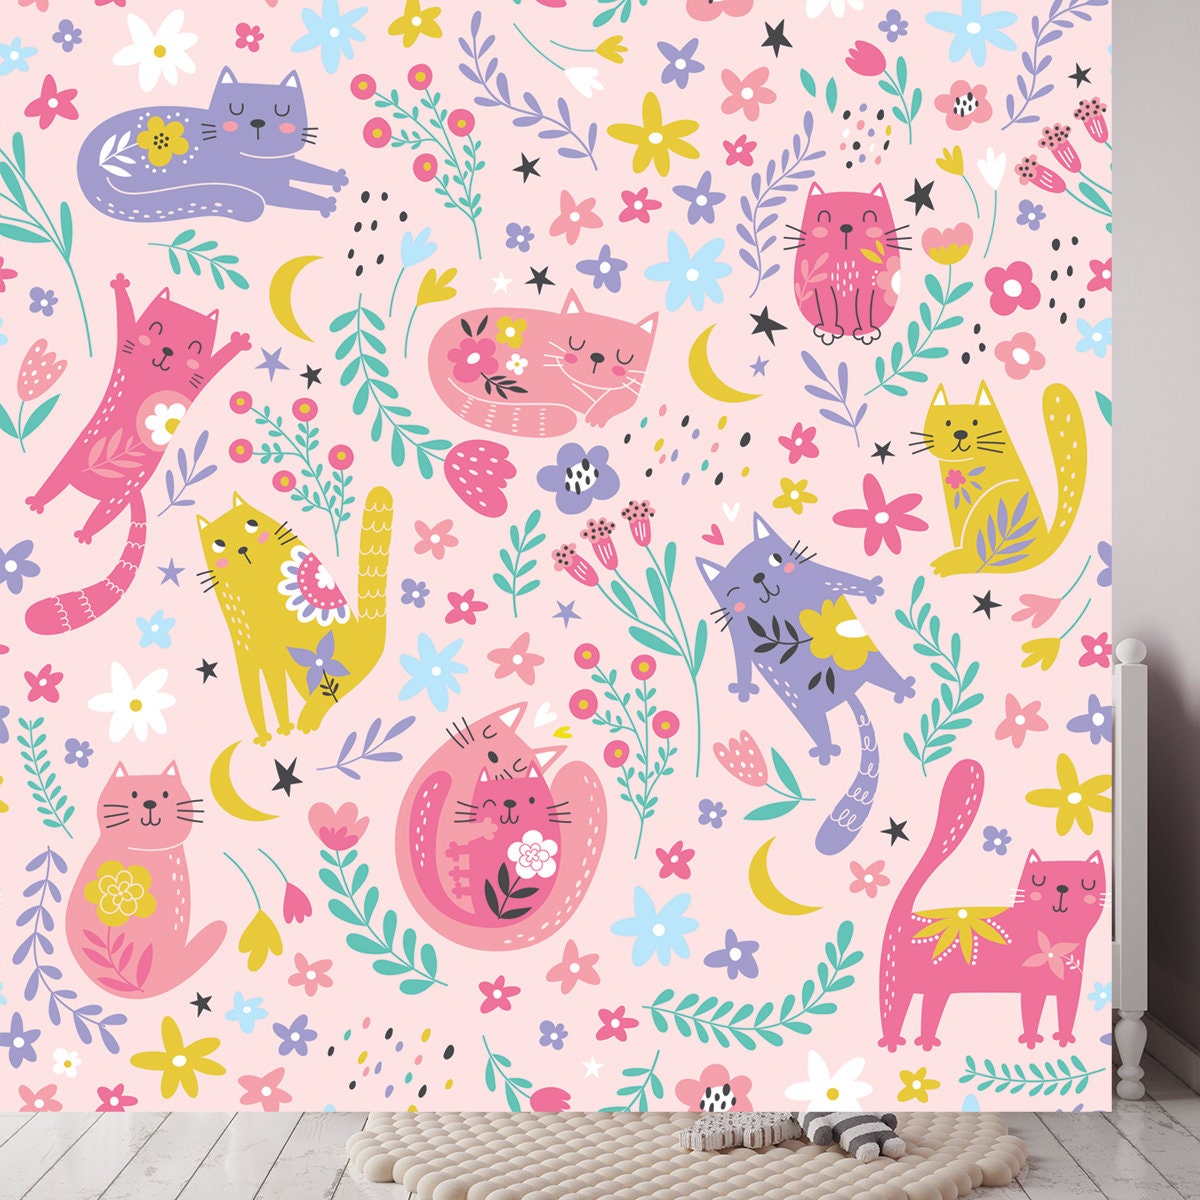 Cute Funny Cats in Cartoon Style Wallpaper Girl Bedroom Mural